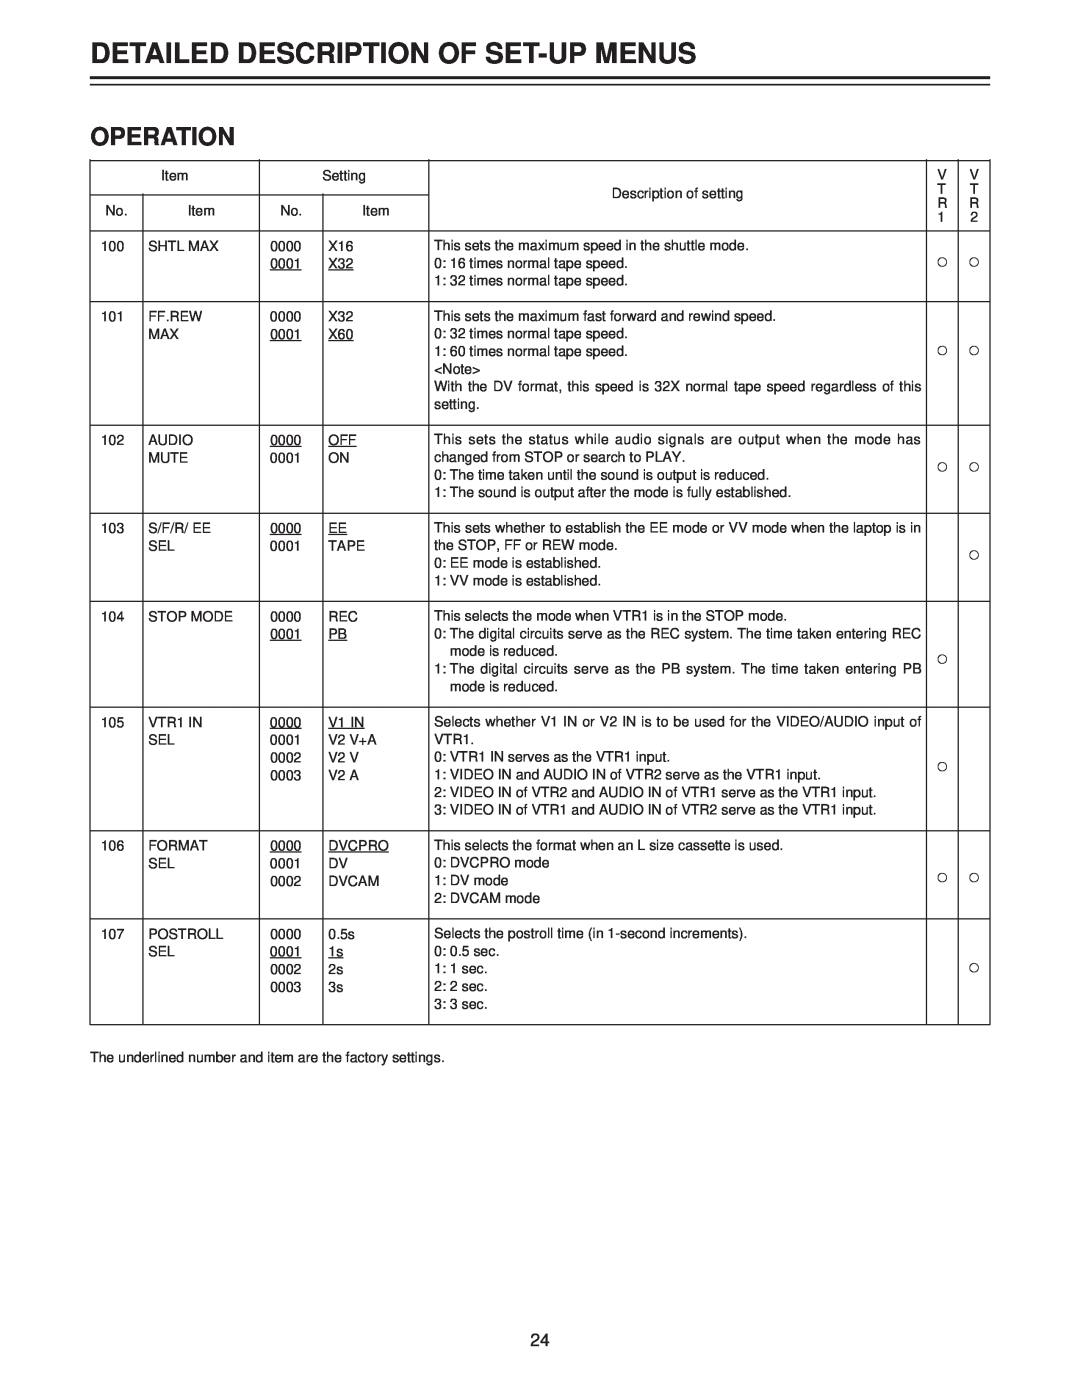 Panasonic AJ-LT85P manual Operation, Detailed Description Of Set-Up Menus 